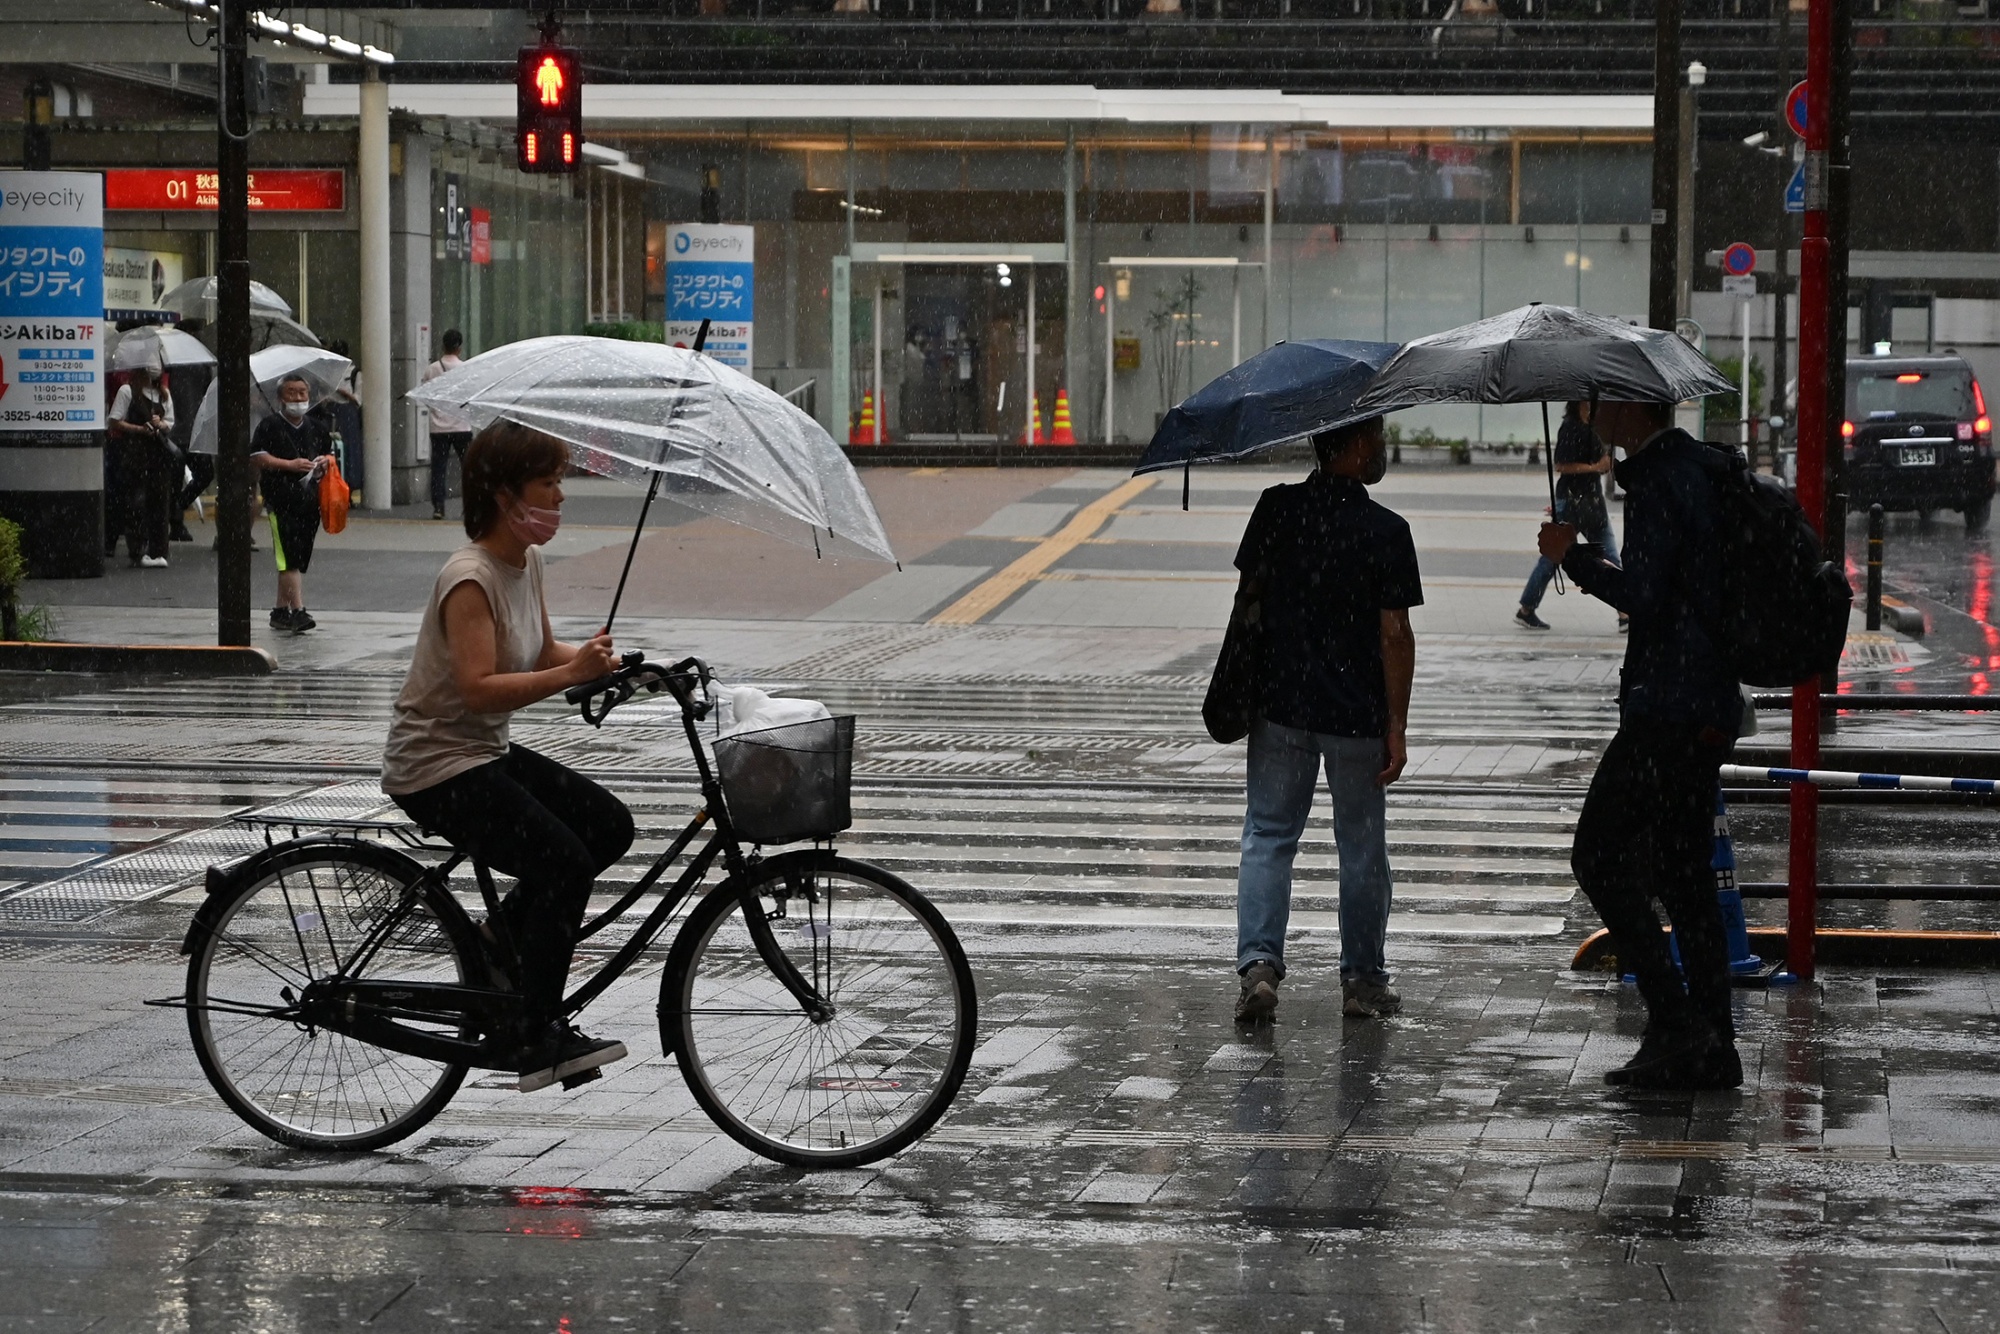 Japan Weather Agency Warns of Landslides, Floods Due to Storm Bloomberg